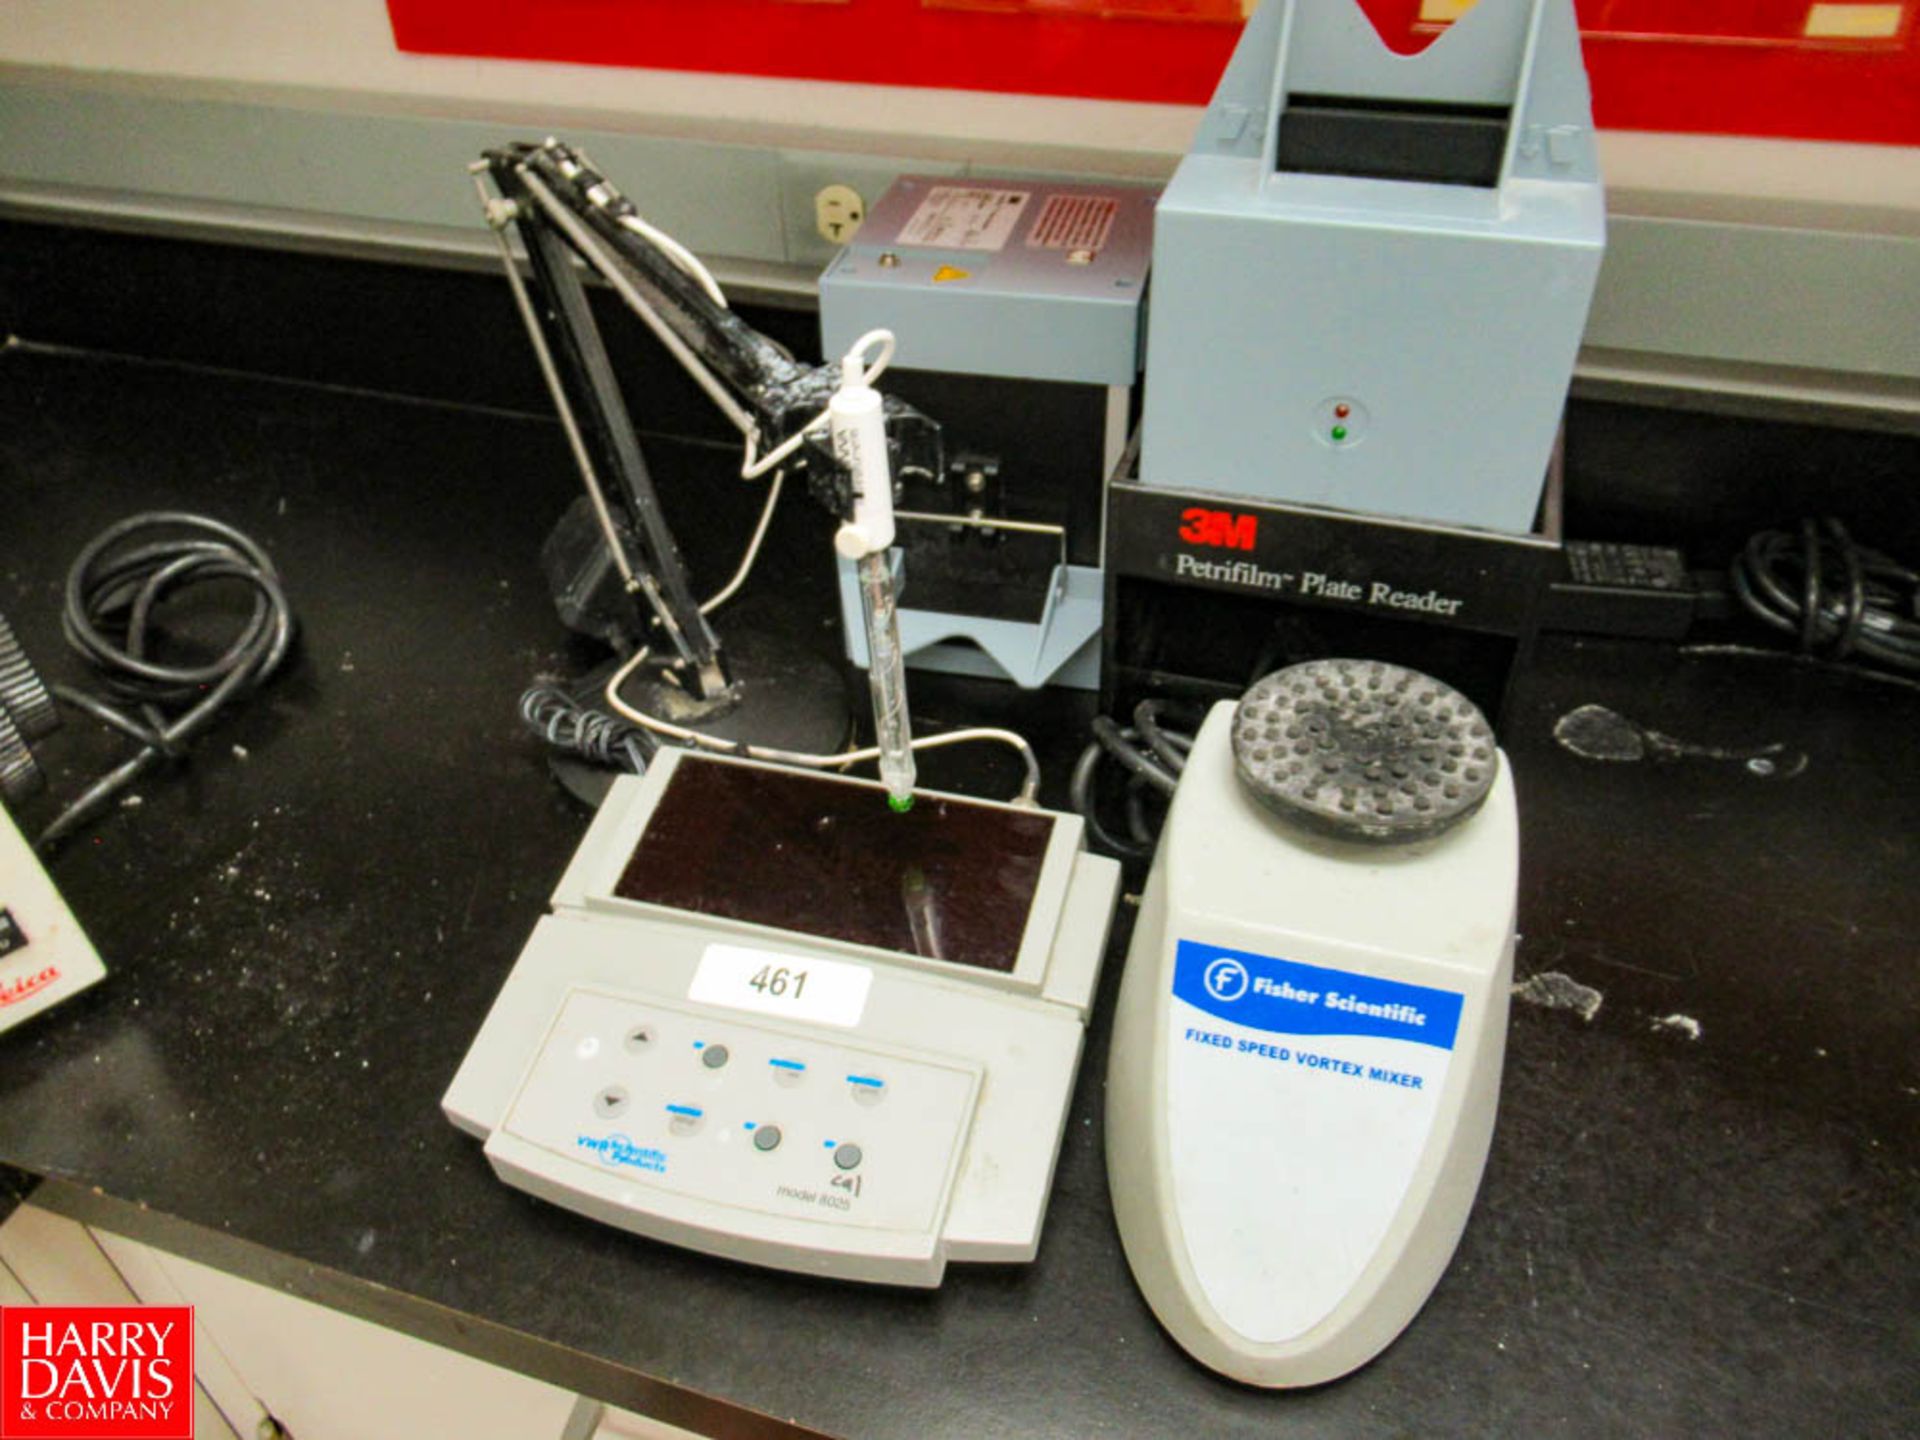 Lab Instruments Includes VWR 8025 Anlayzer, Fisher Scientific Vortex Mixer and 3M Plate Readers,